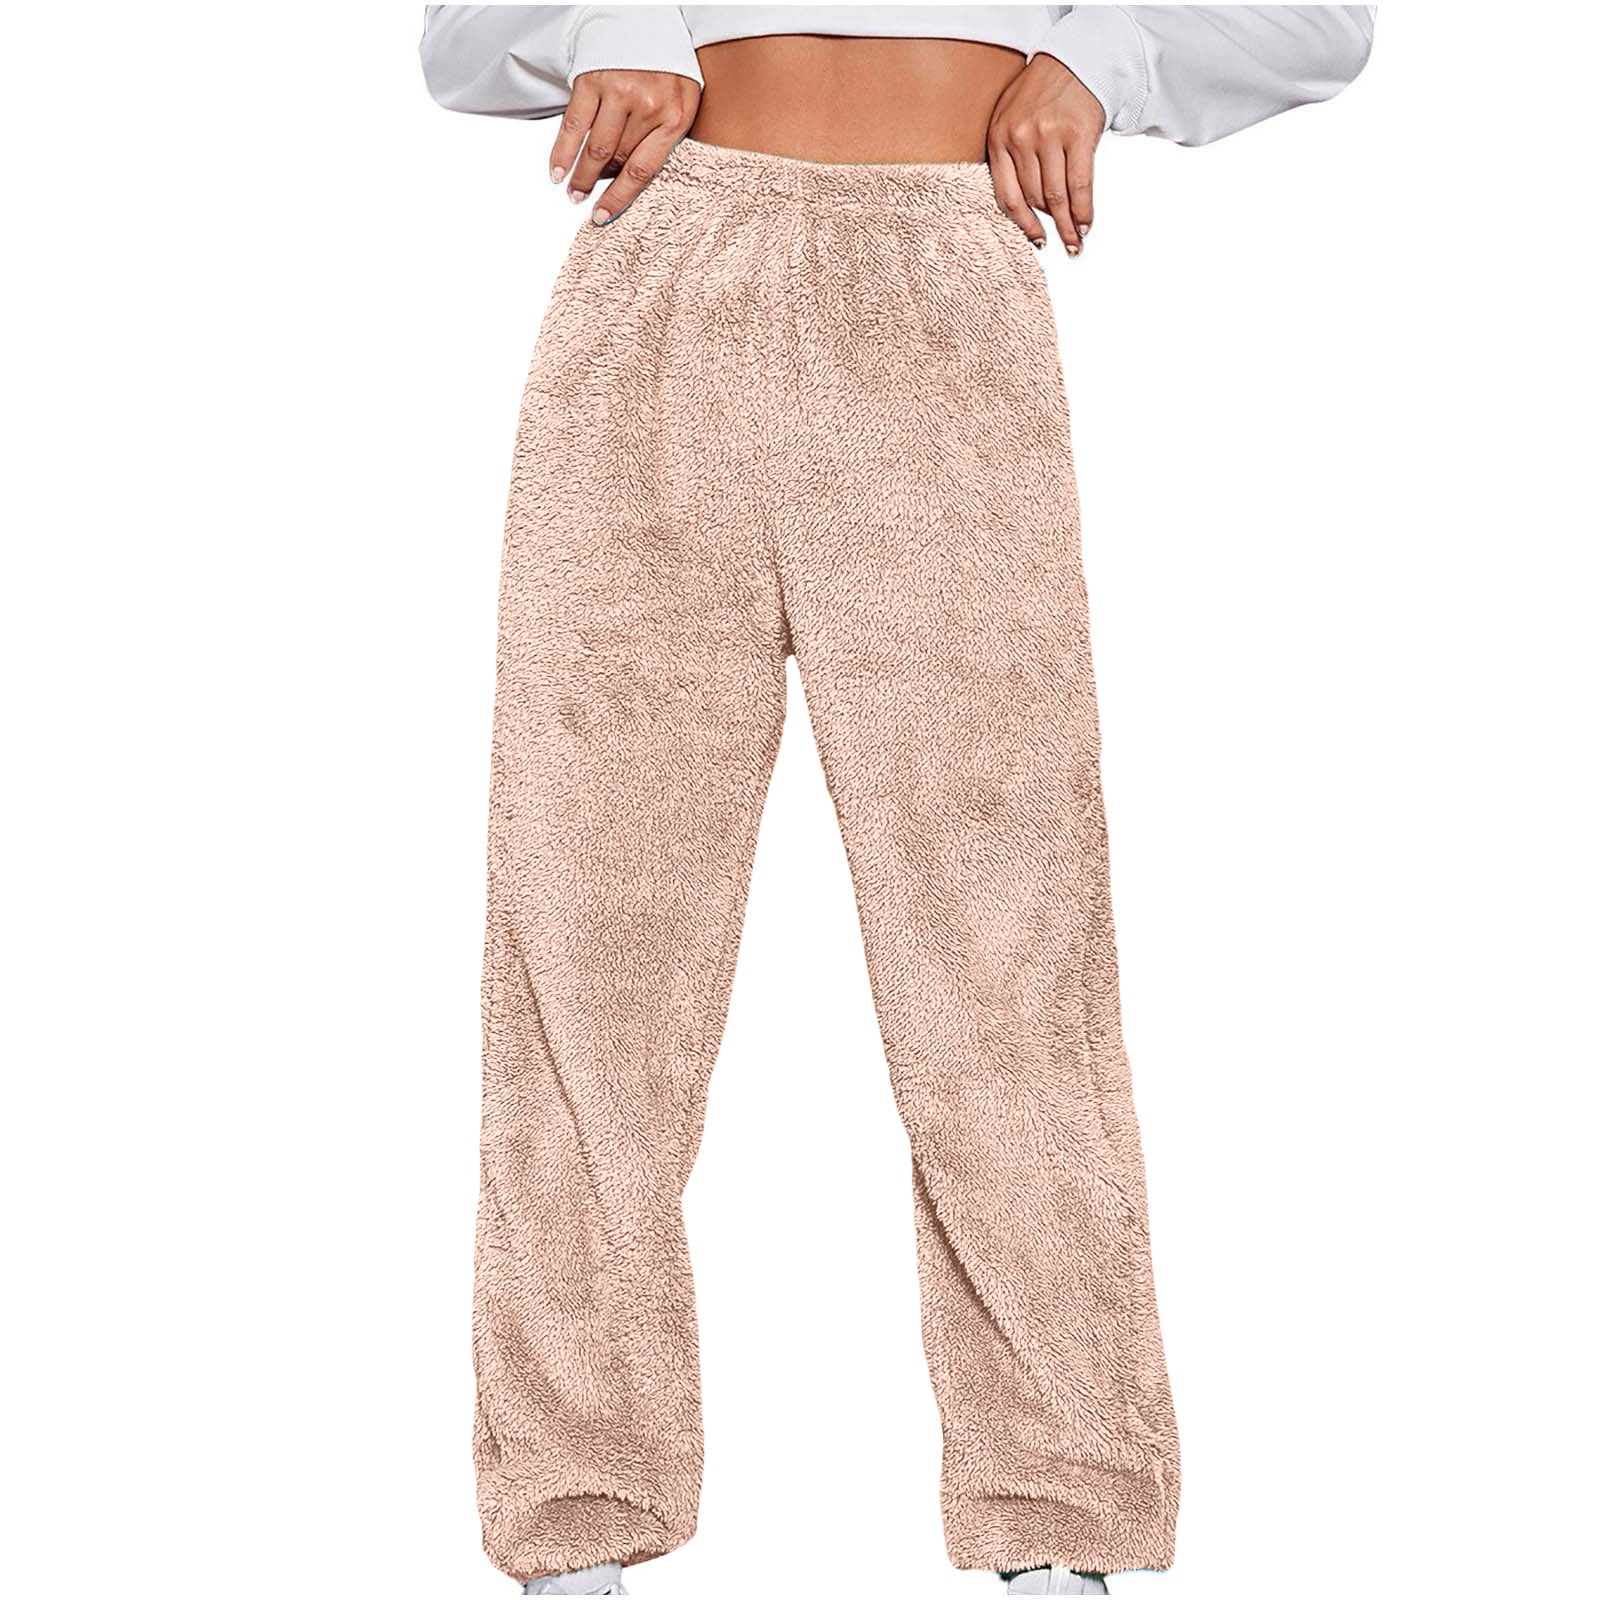 Hfyihgf Womens Fuzzy Fleece Pants Winter Warm Thicken Jogger Athletic  Sweatpants for Ladies Comfy Soft Plush Pajama Pants Plus Size(Dark Gray,XL)  